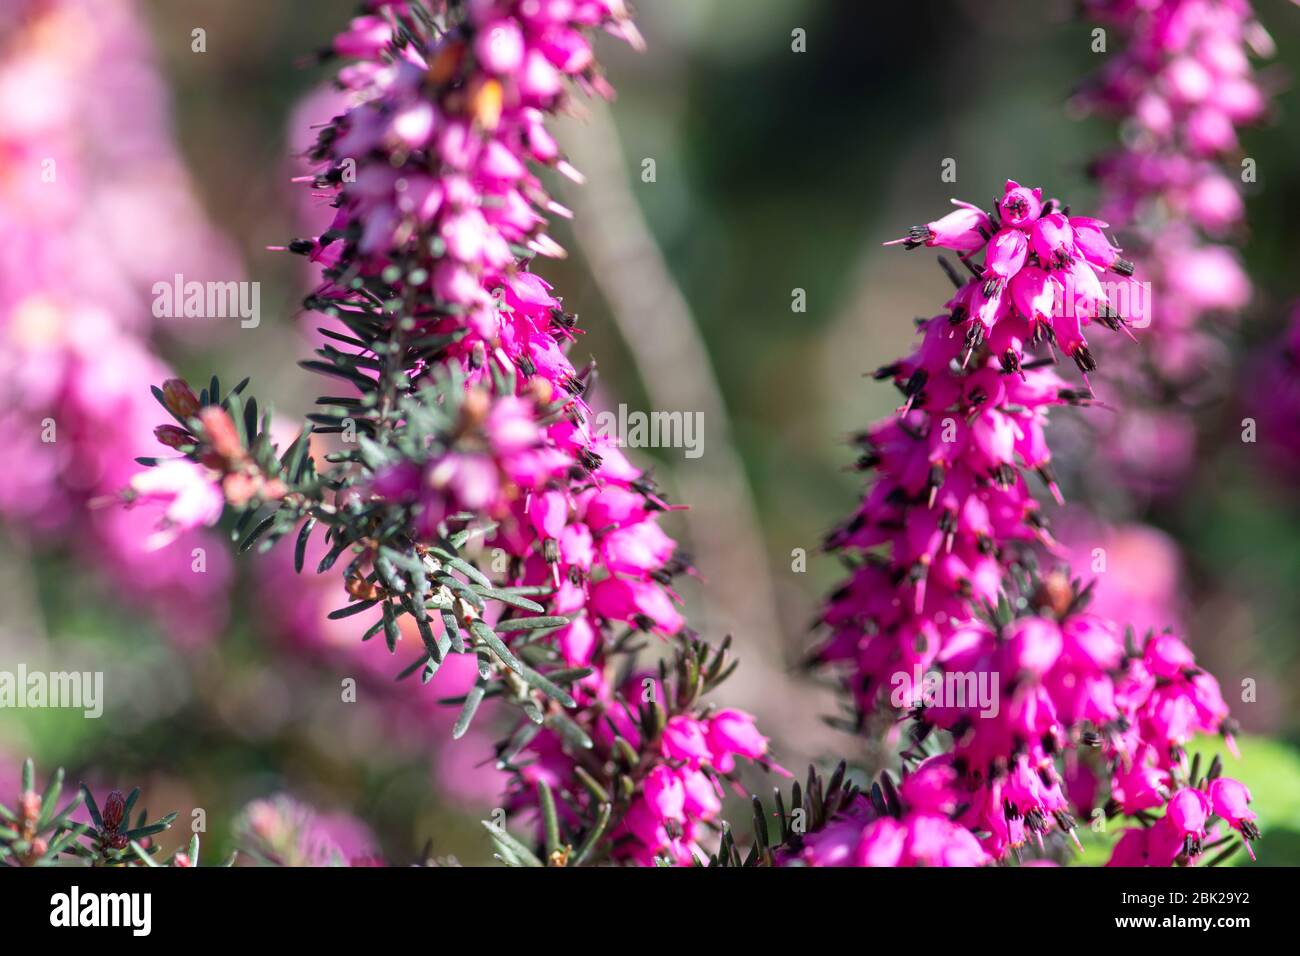 Schöne lila Blume, erica carnea Blume, Winter-blühende Heide, Frühling oder alpine Heide, aus nächster Nähe Stockfoto